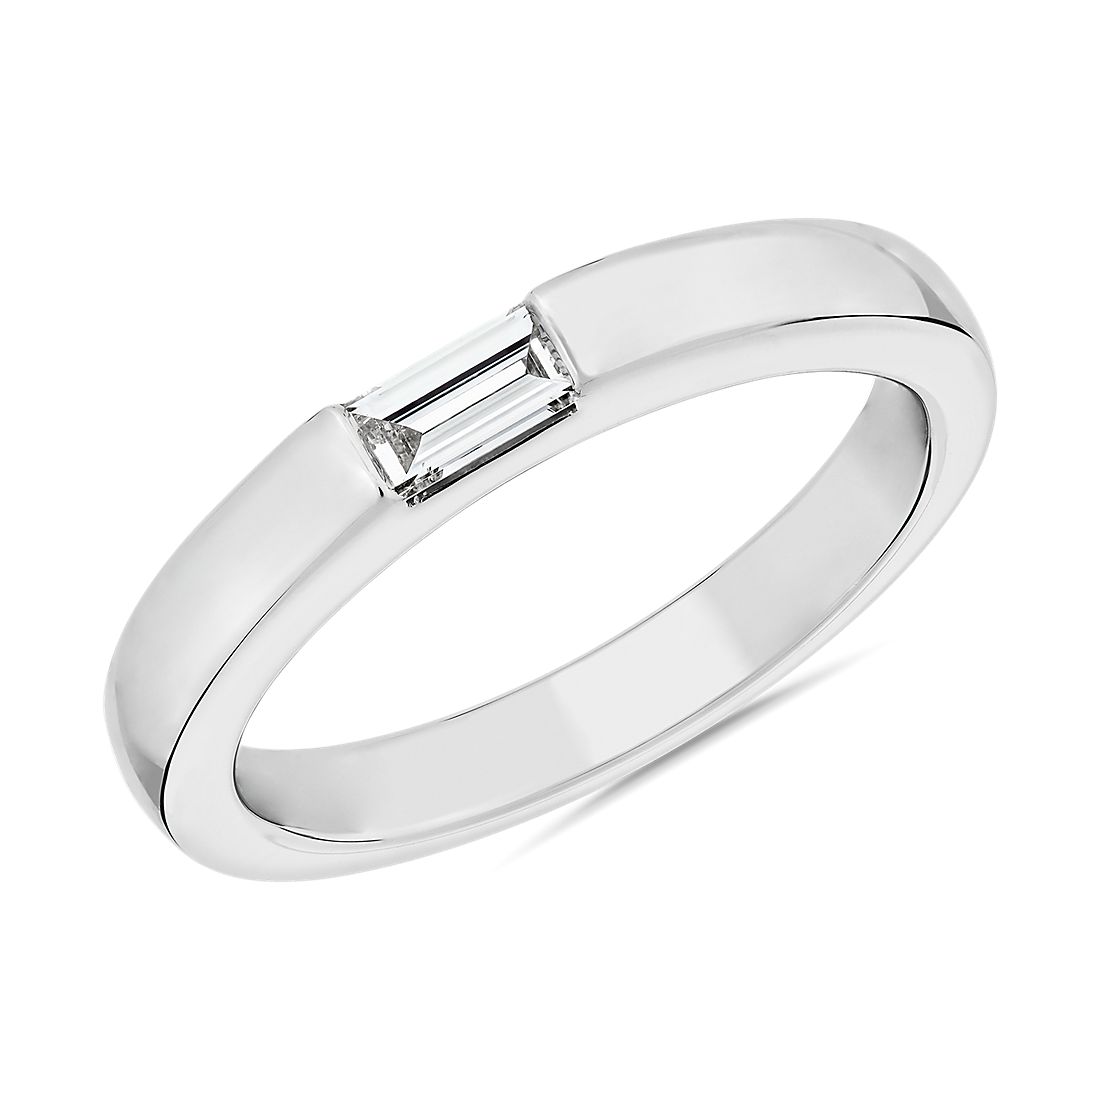 ZAC ZAC POSEN East West Single Baguette Diamond Ring in Platinum (2.6 mm, 1/6 ct. tw.)